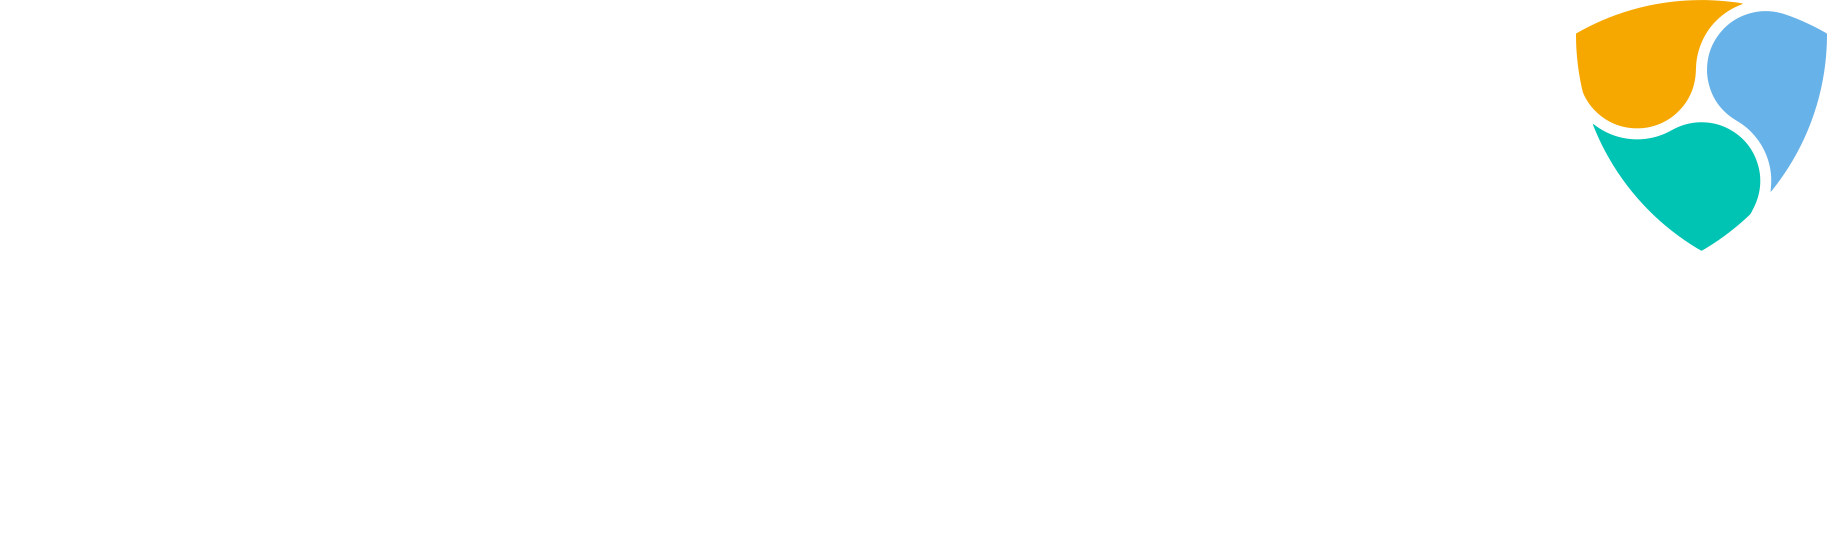 Nem Logo - NEM – Distributed Ledger Technology (Blockchain) » Marketing Materials